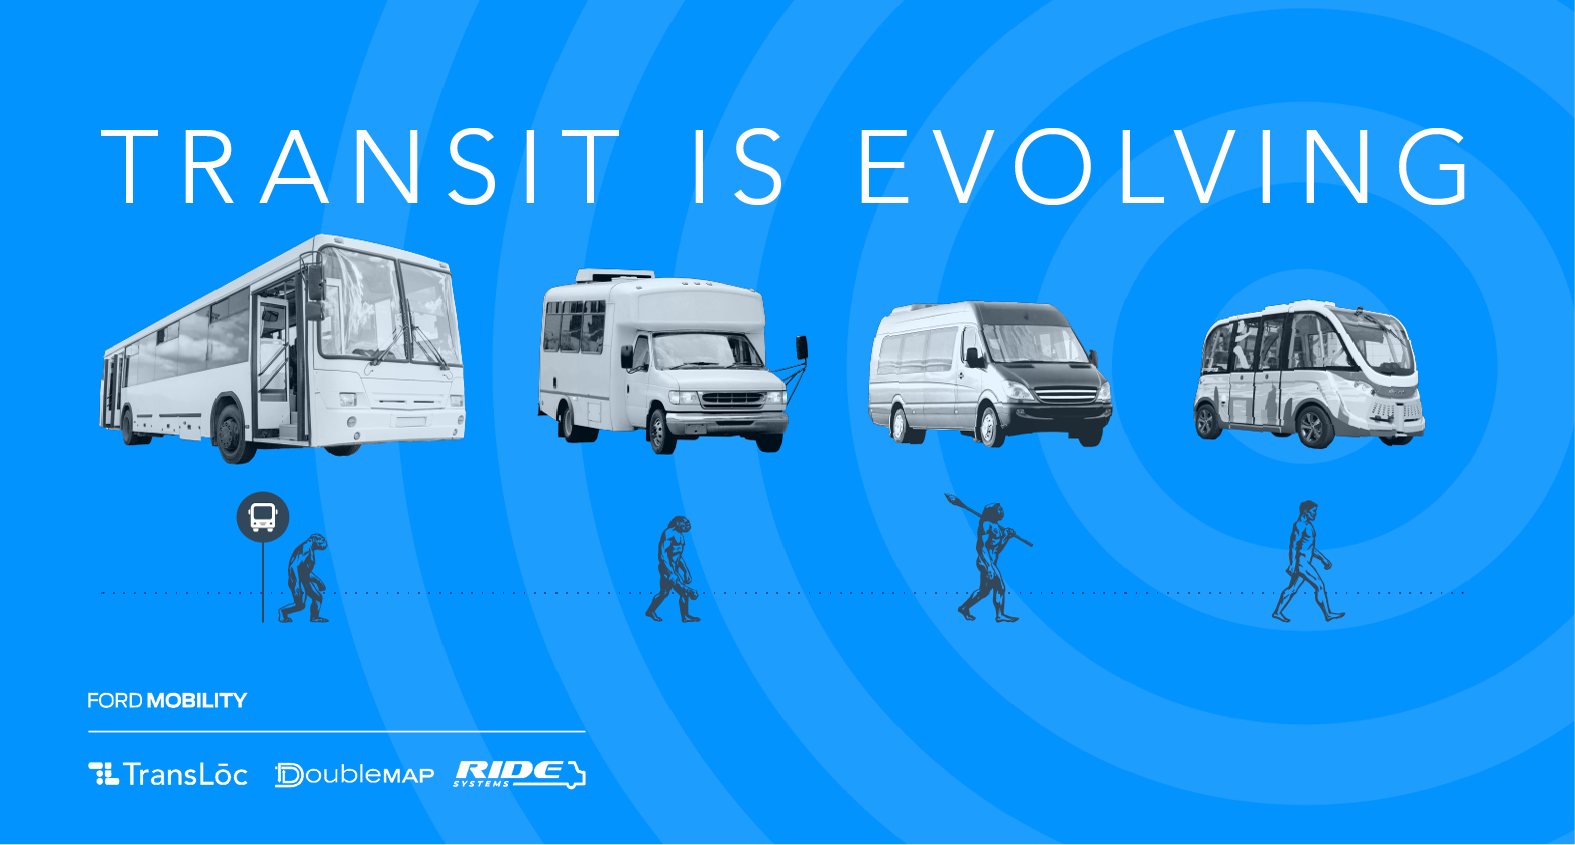 Transit is evolving